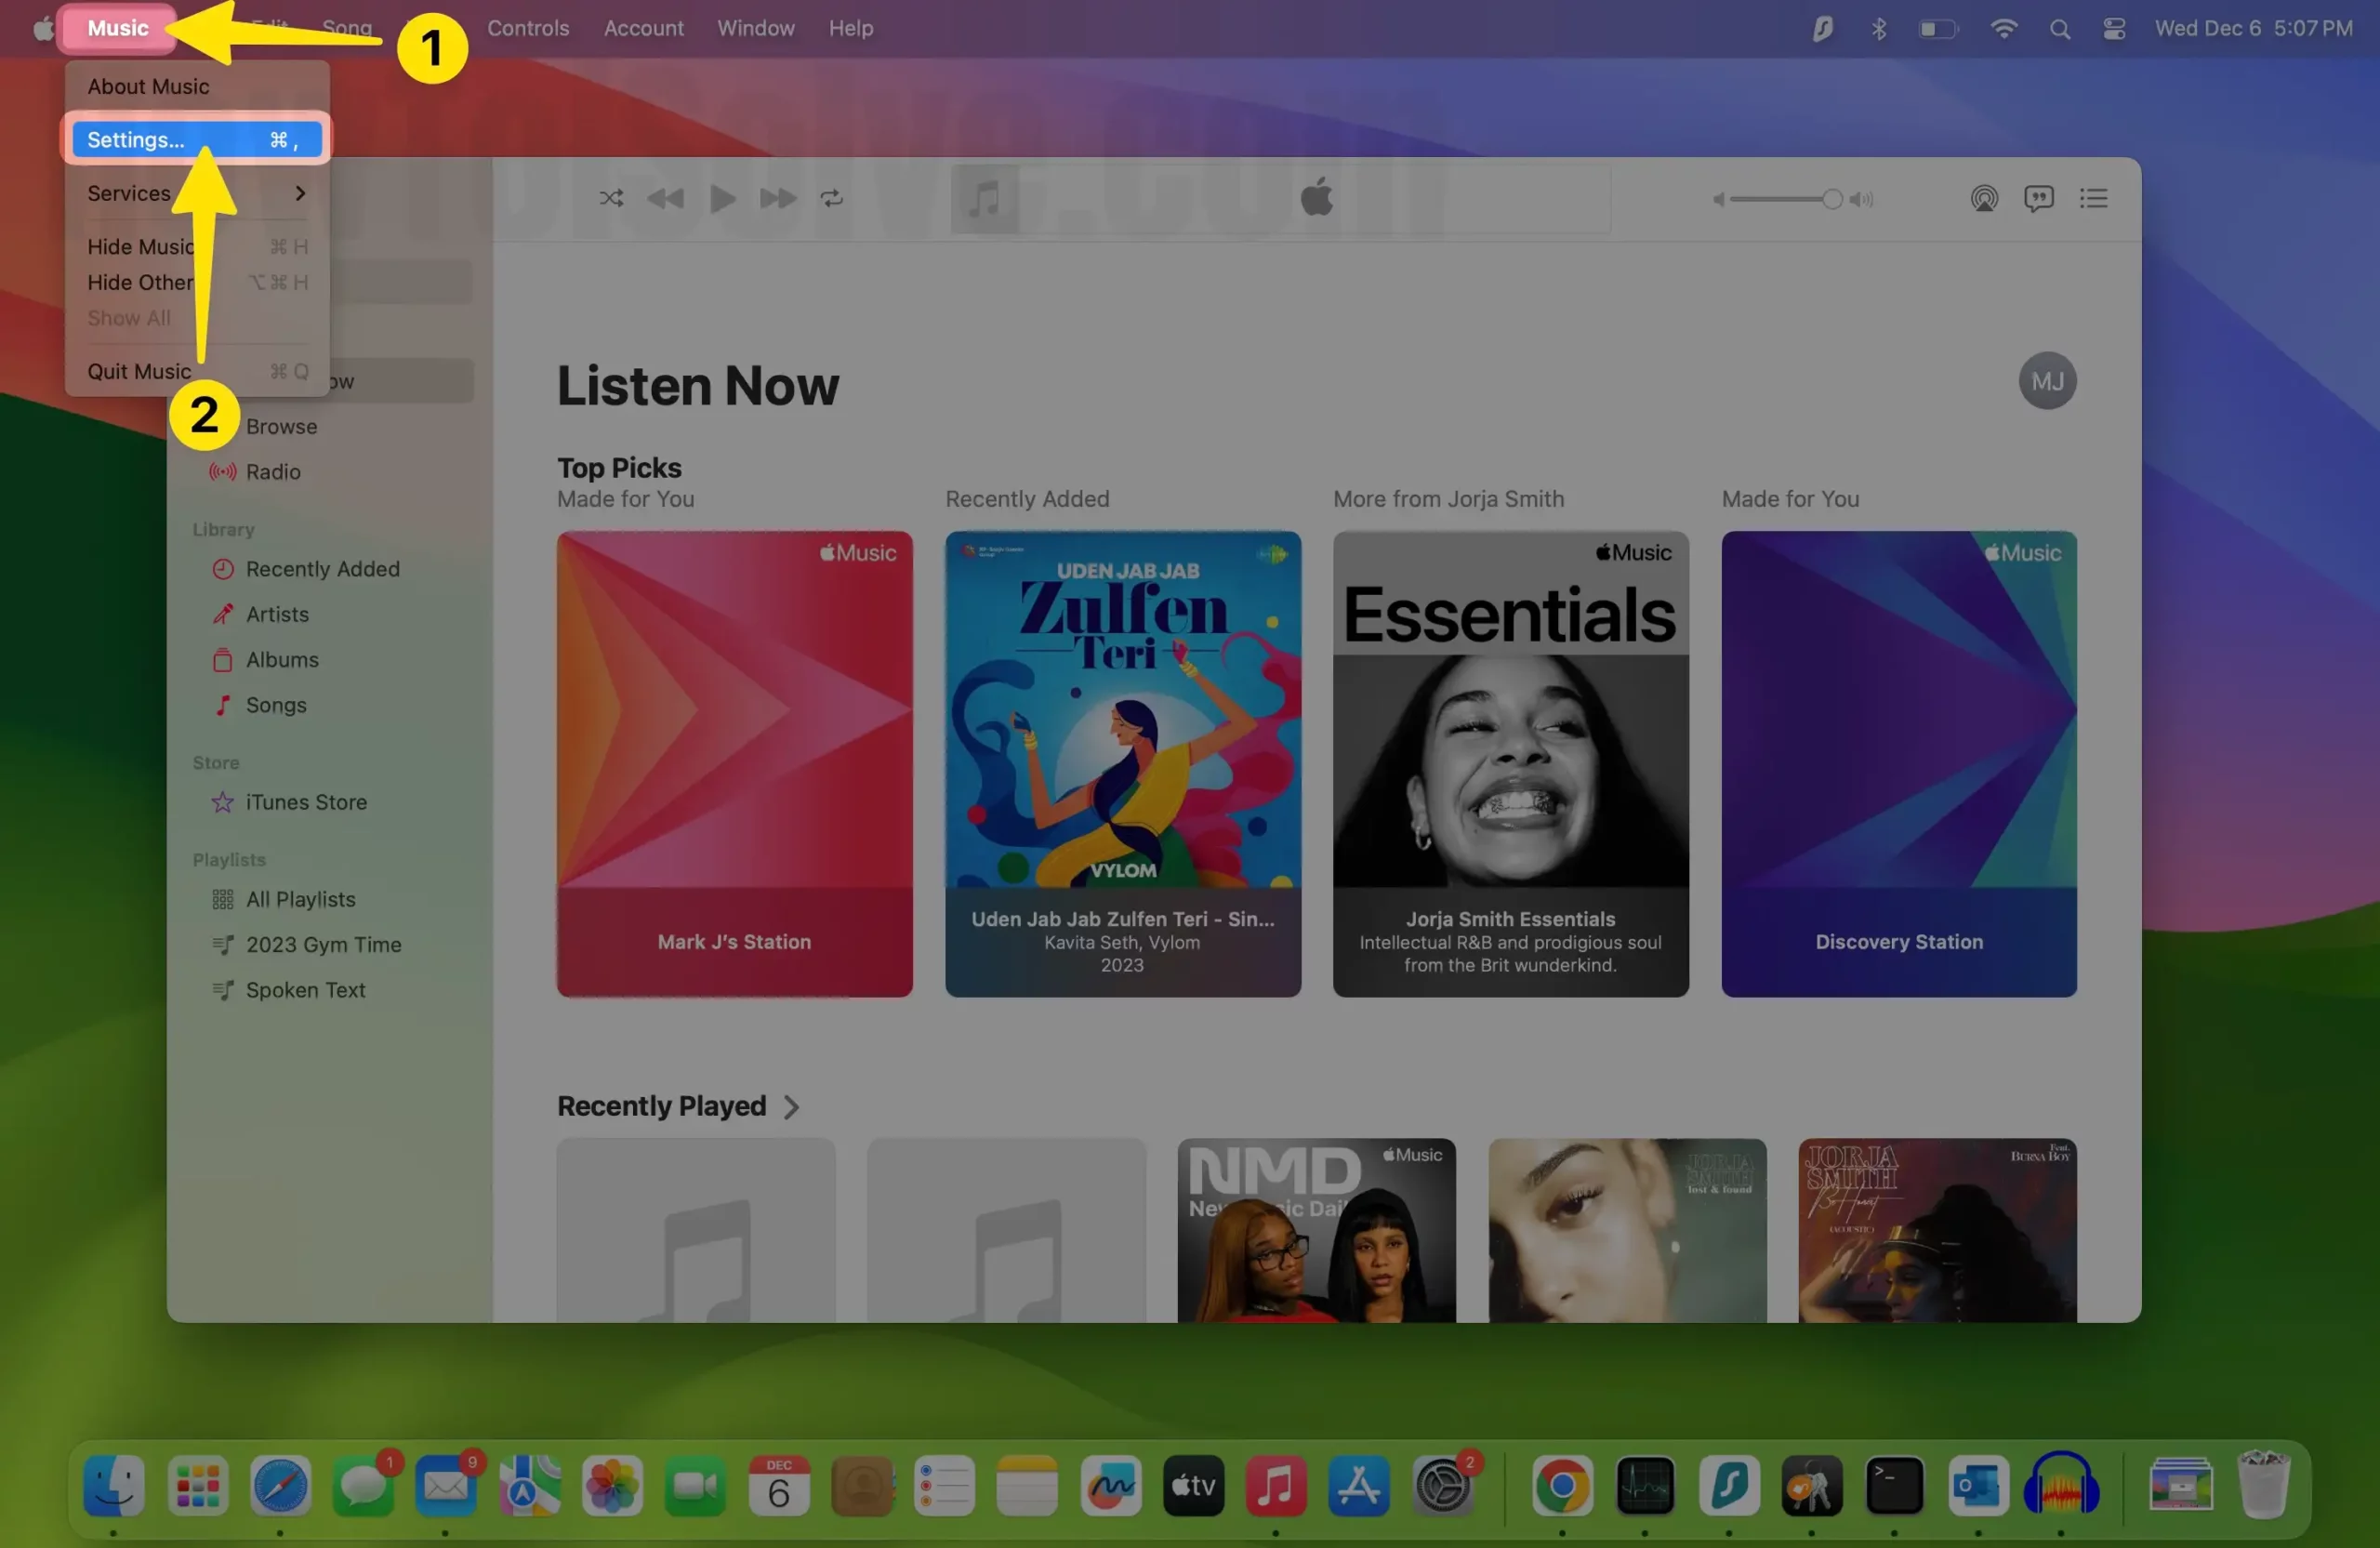 Open music app select settings... on mac